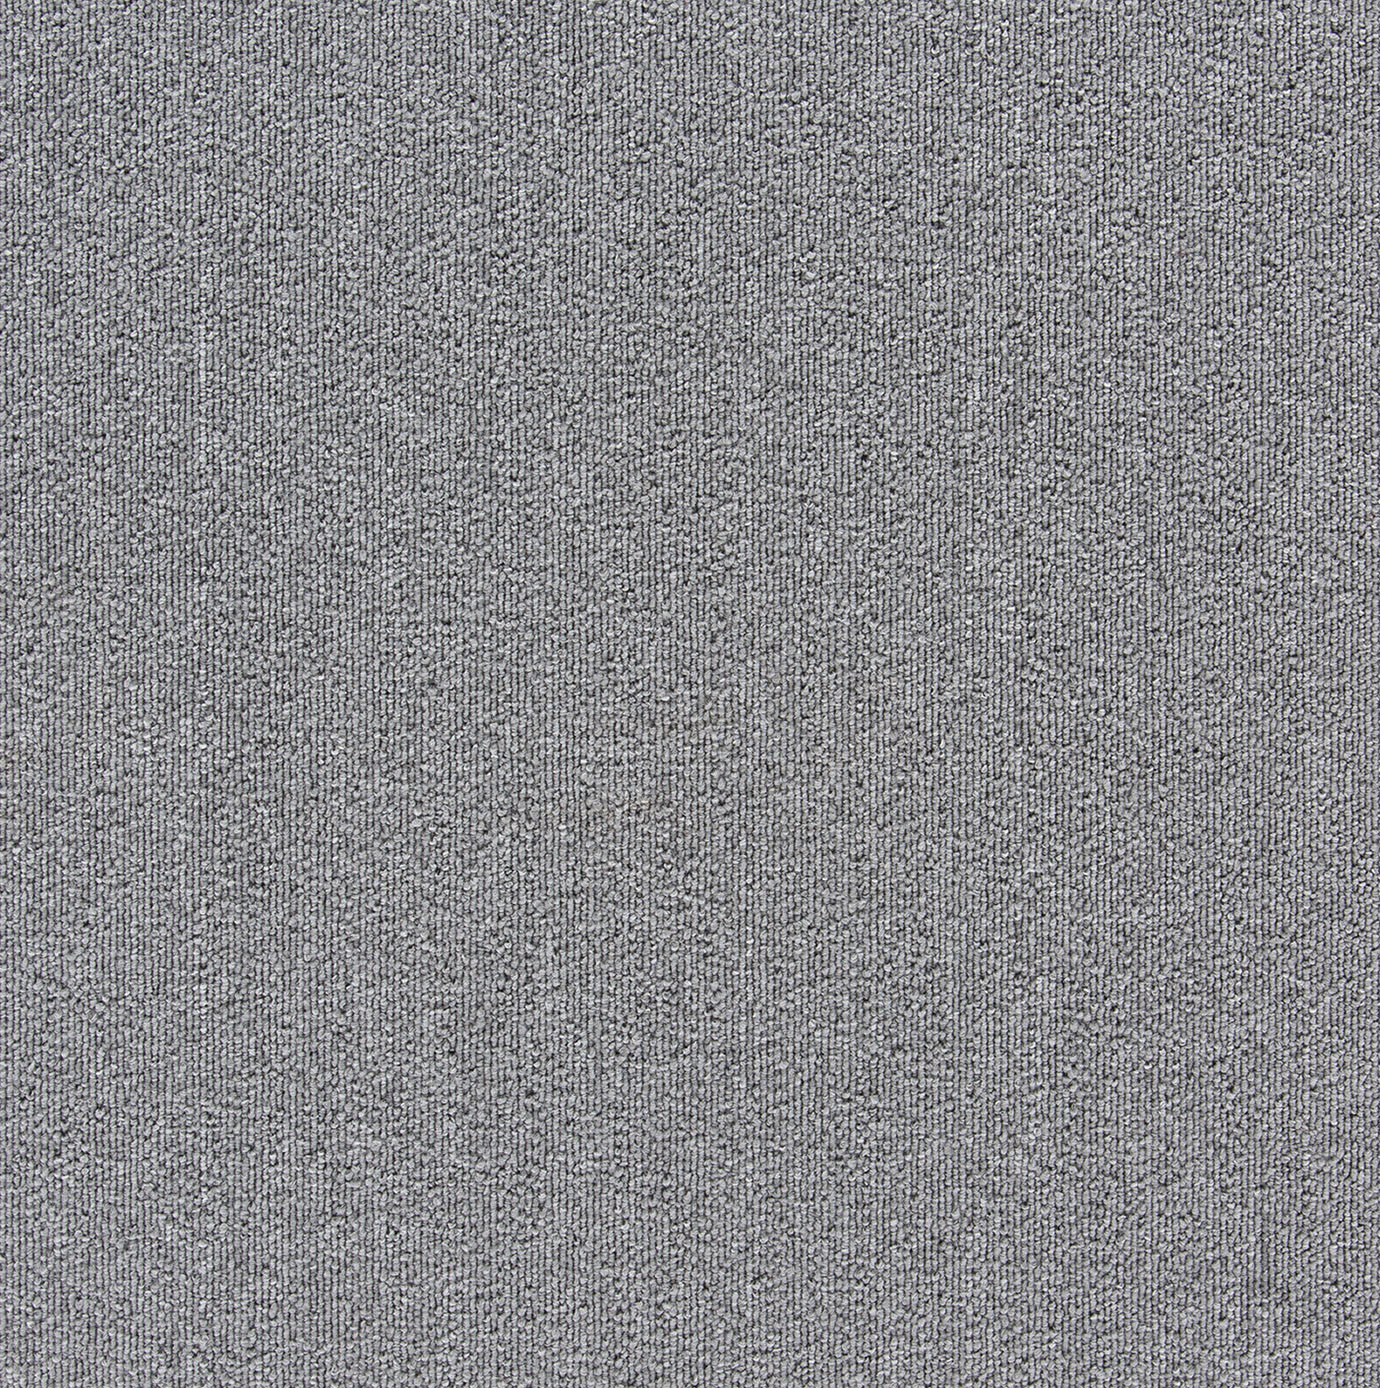 KD0581 川島織物セルコン タイルカーペット カラーバンク ピクセル   川島織物セルコン タイルカーペット